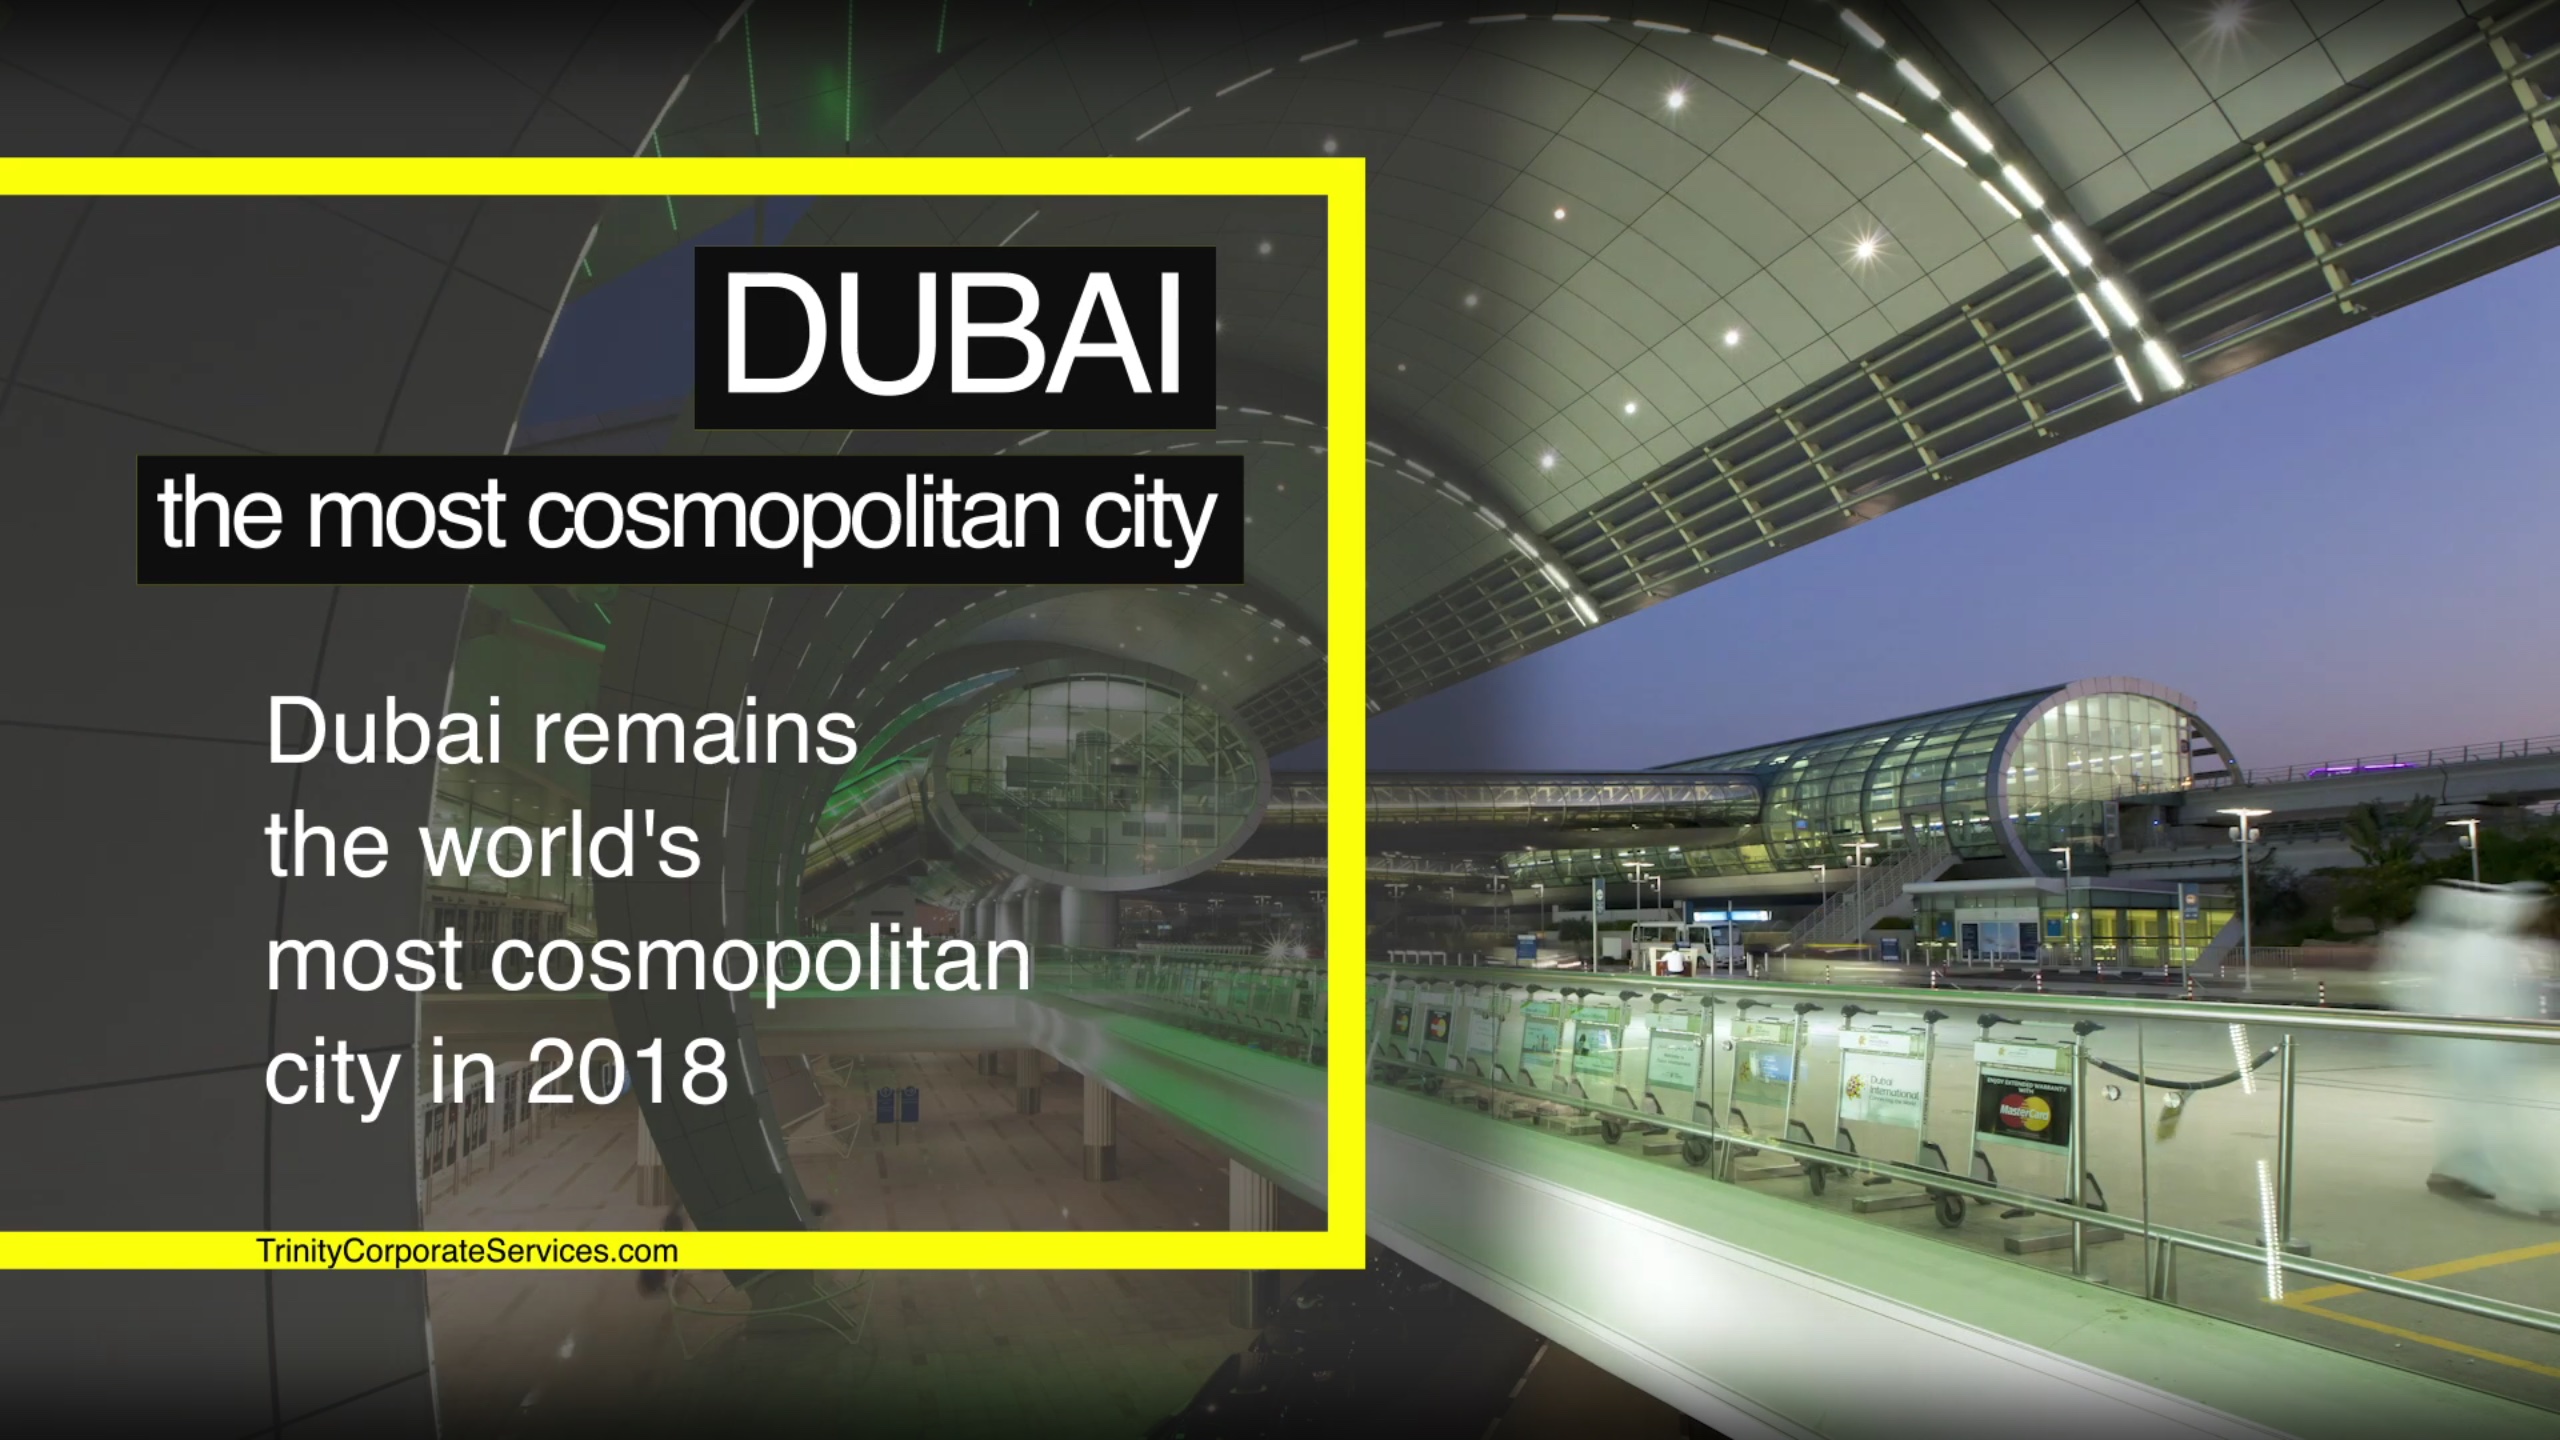 Dubai - The most cosmopolitan city